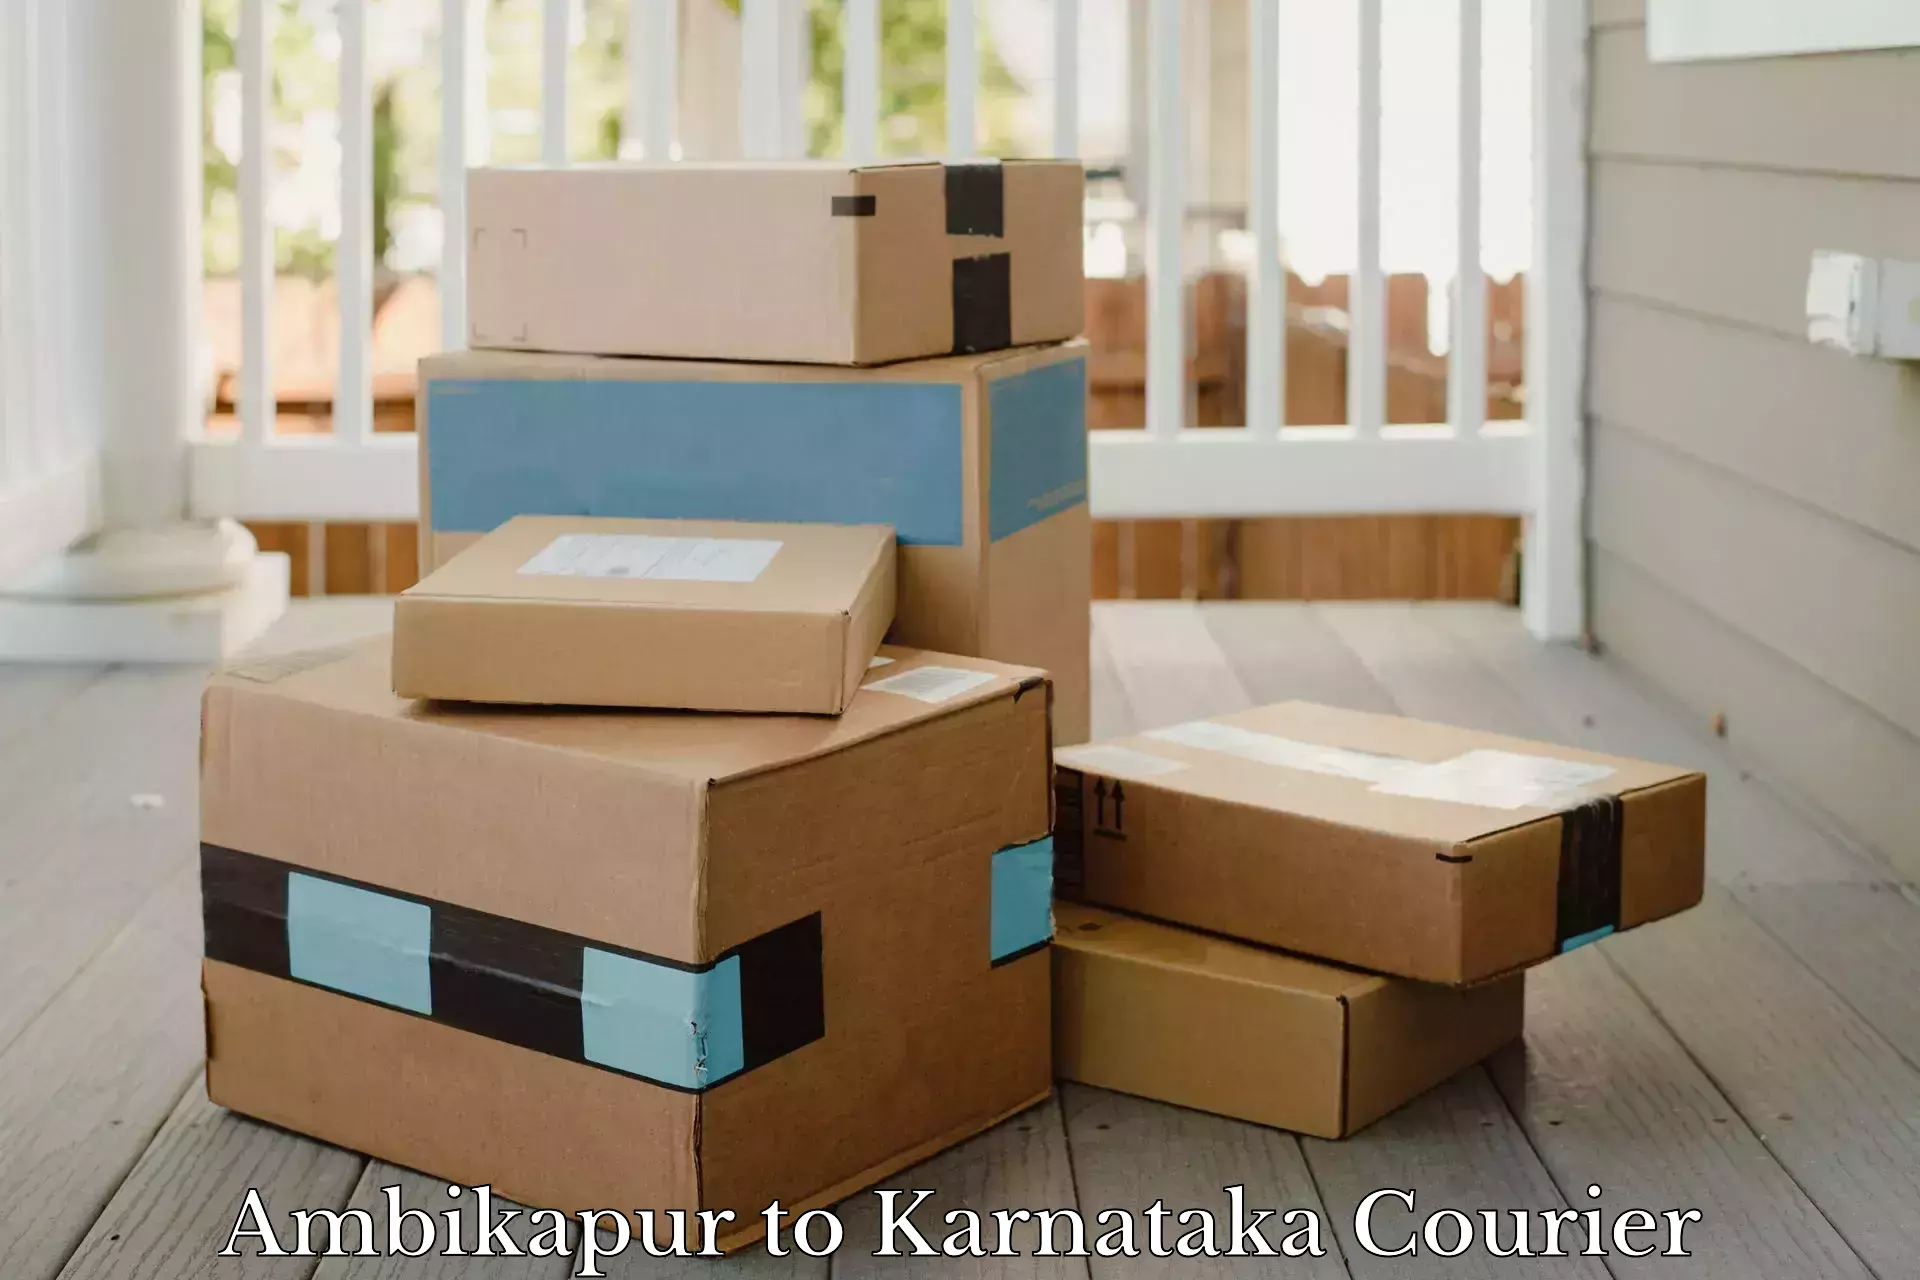 Efficient cargo handling Ambikapur to Karnataka